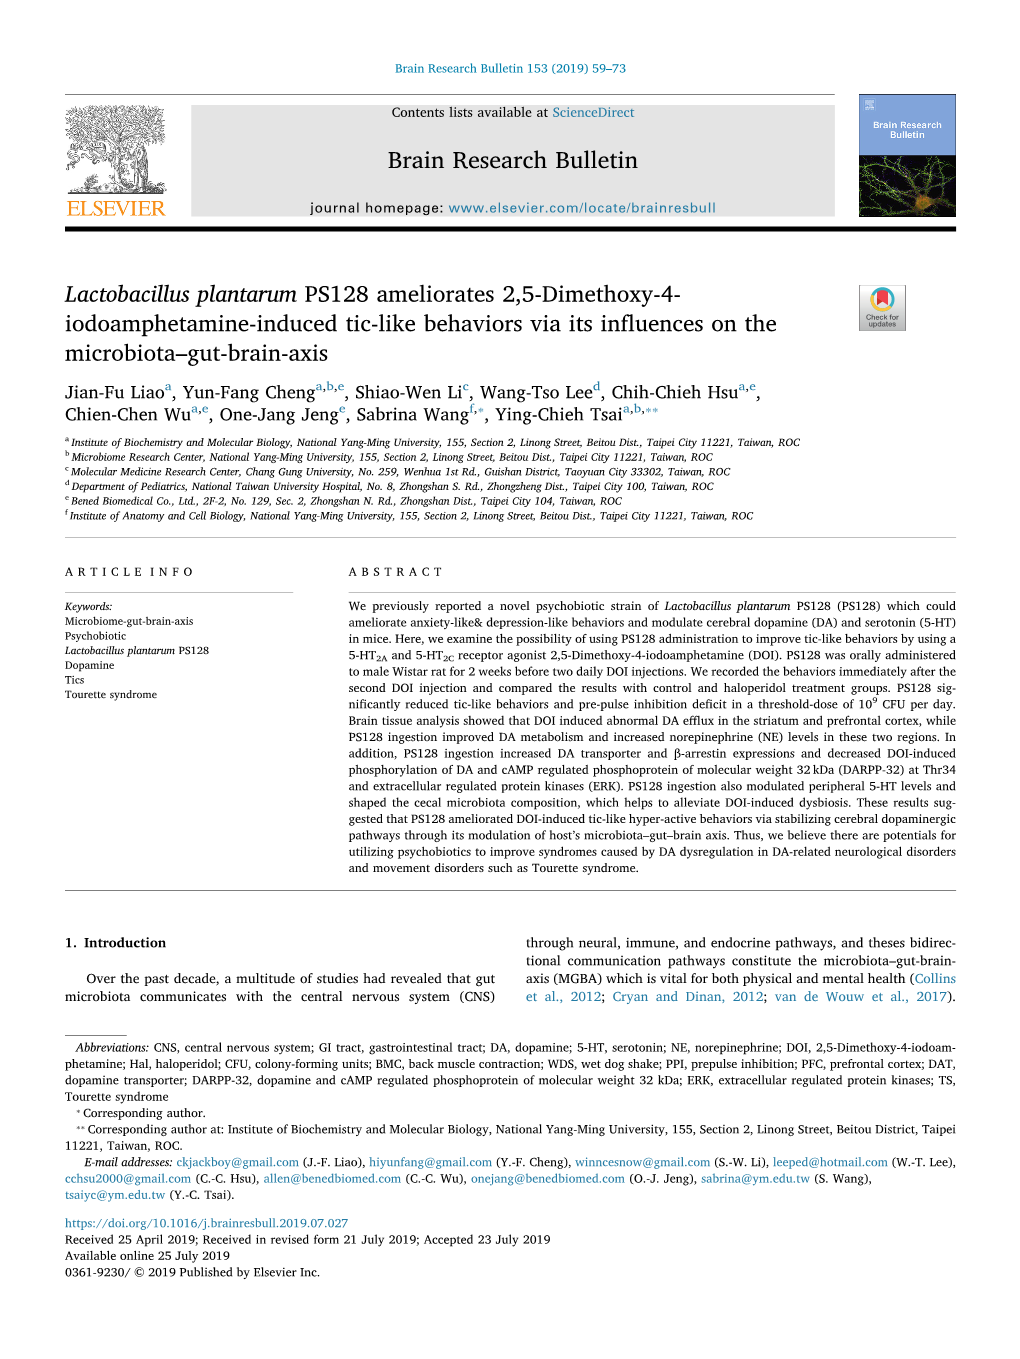 Lactobacillus Plantarum PS128 Ameliorates 2,5-Dimethoxy-4-Iodoamphetamine-Induced Tic-Like Behaviors Via Its Influences on the M